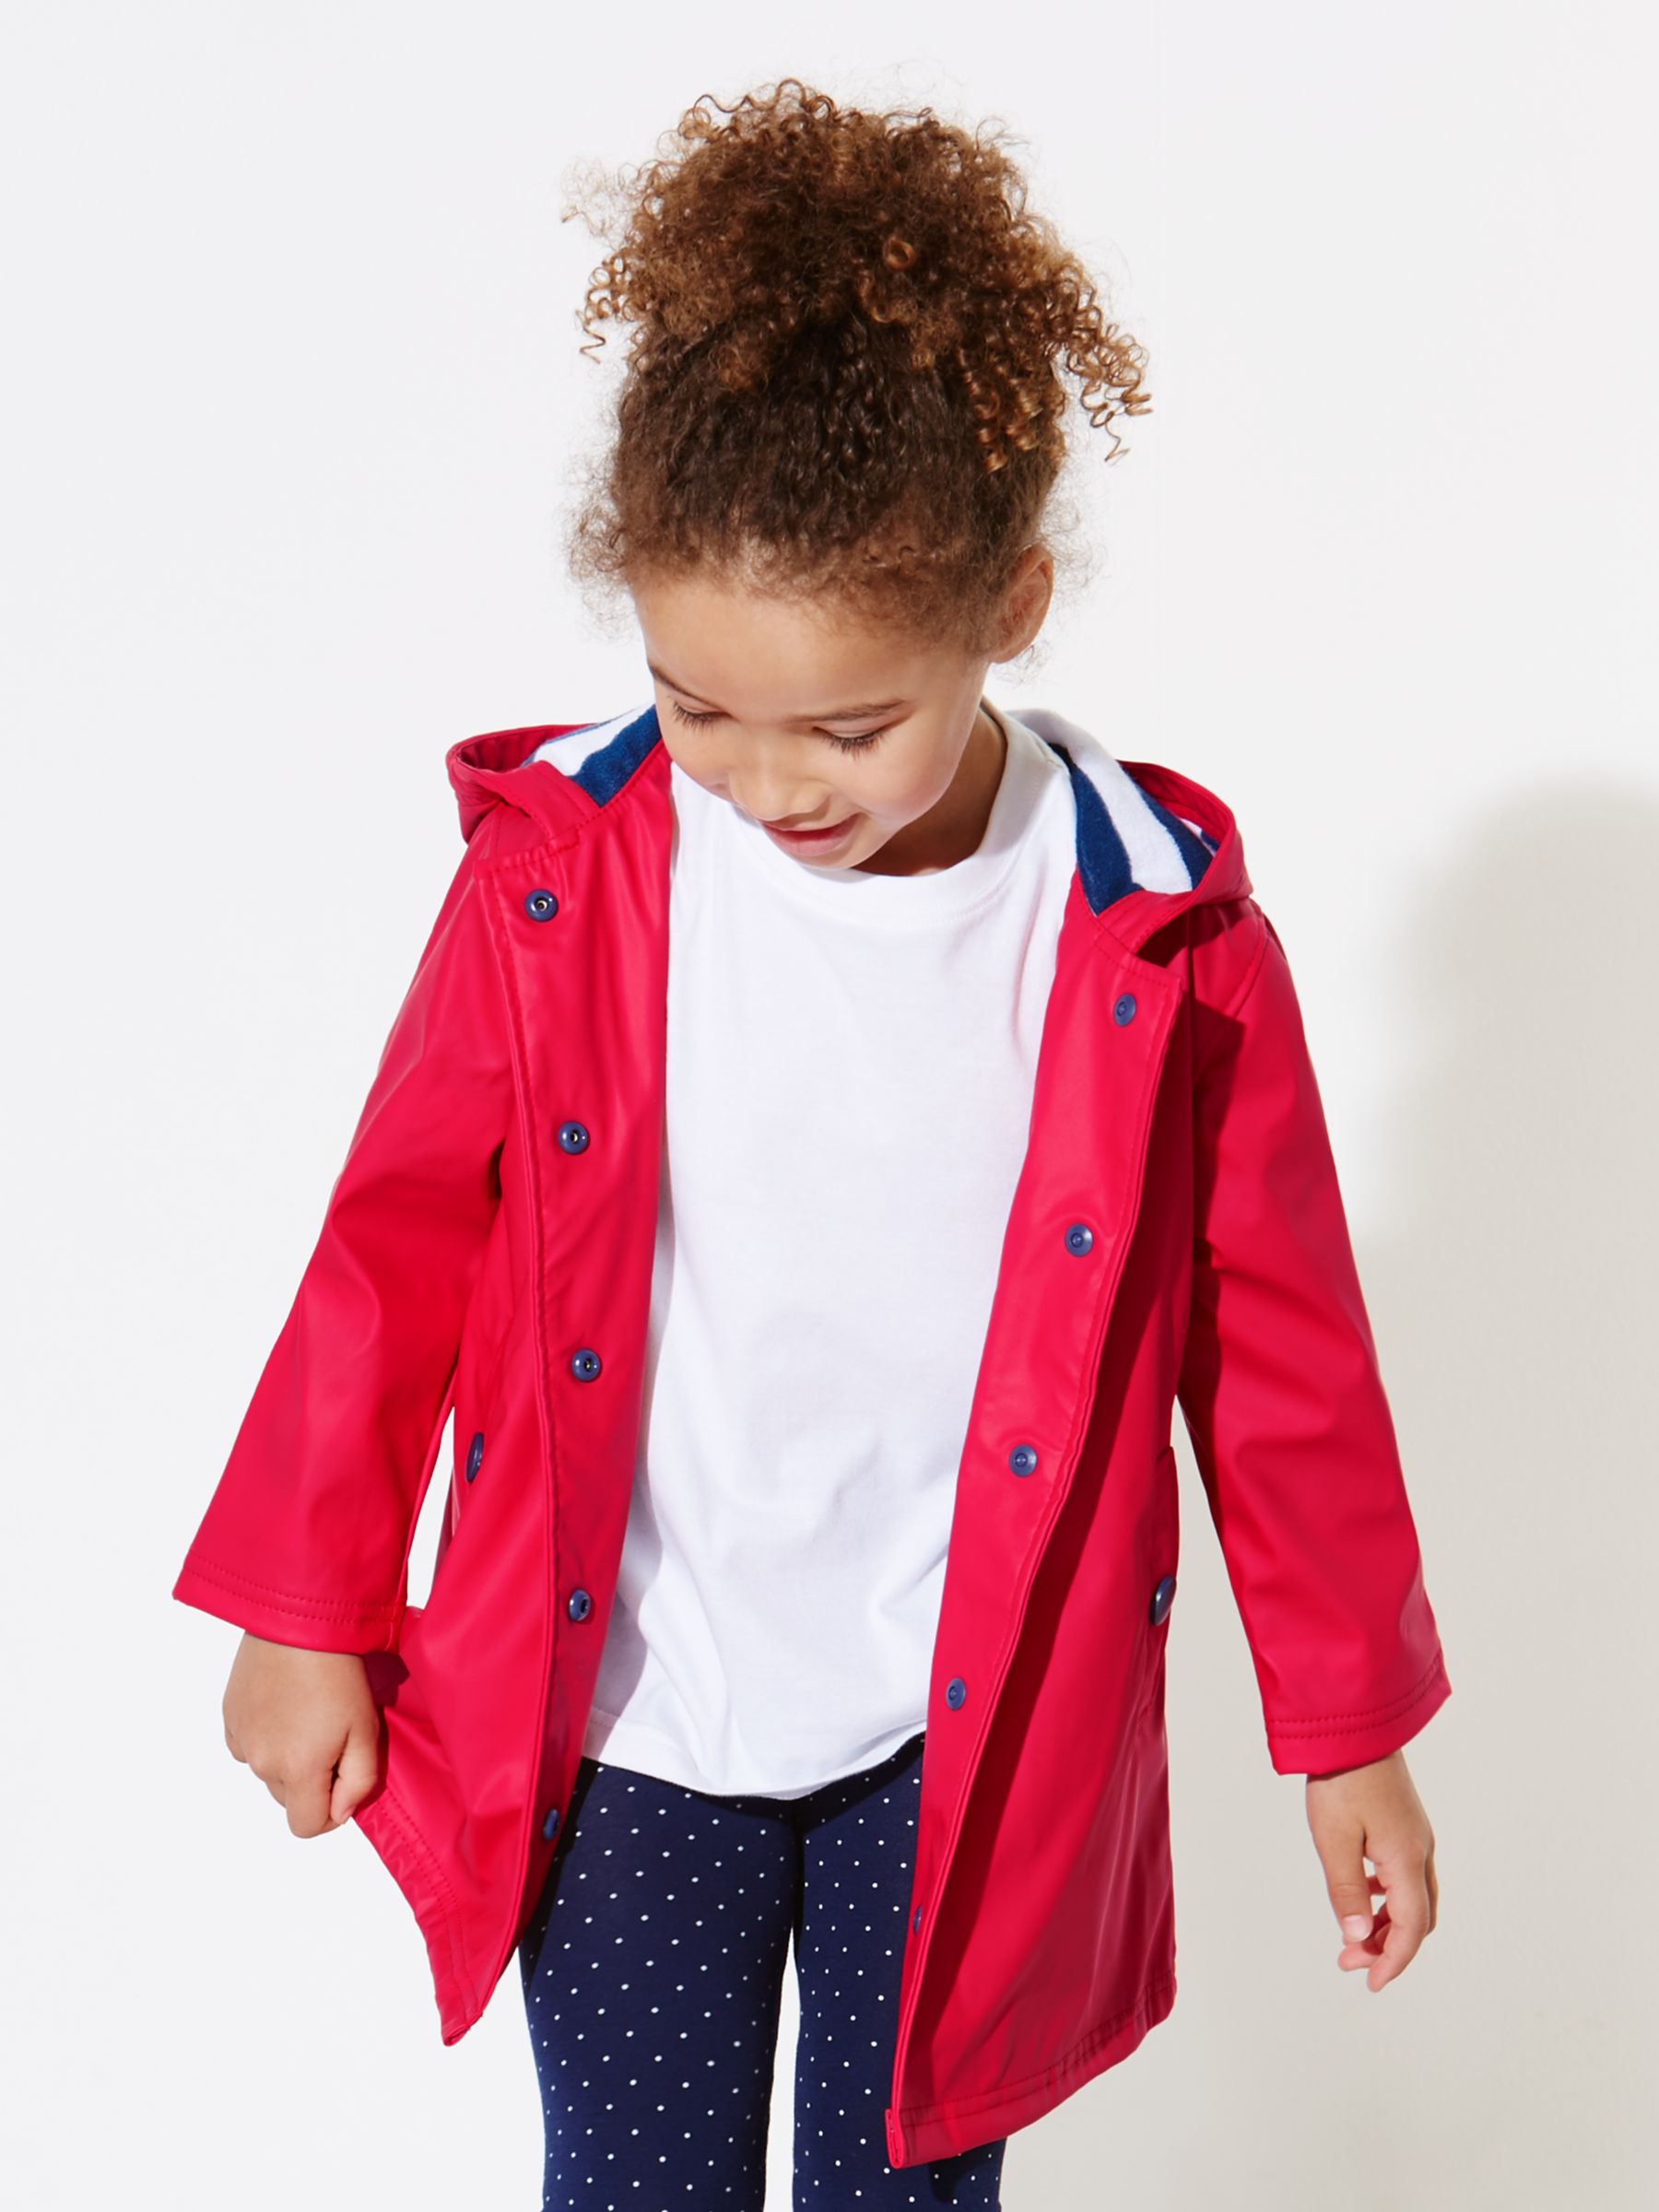 Hatley Girls' Splash Jacket, Red, 6 years